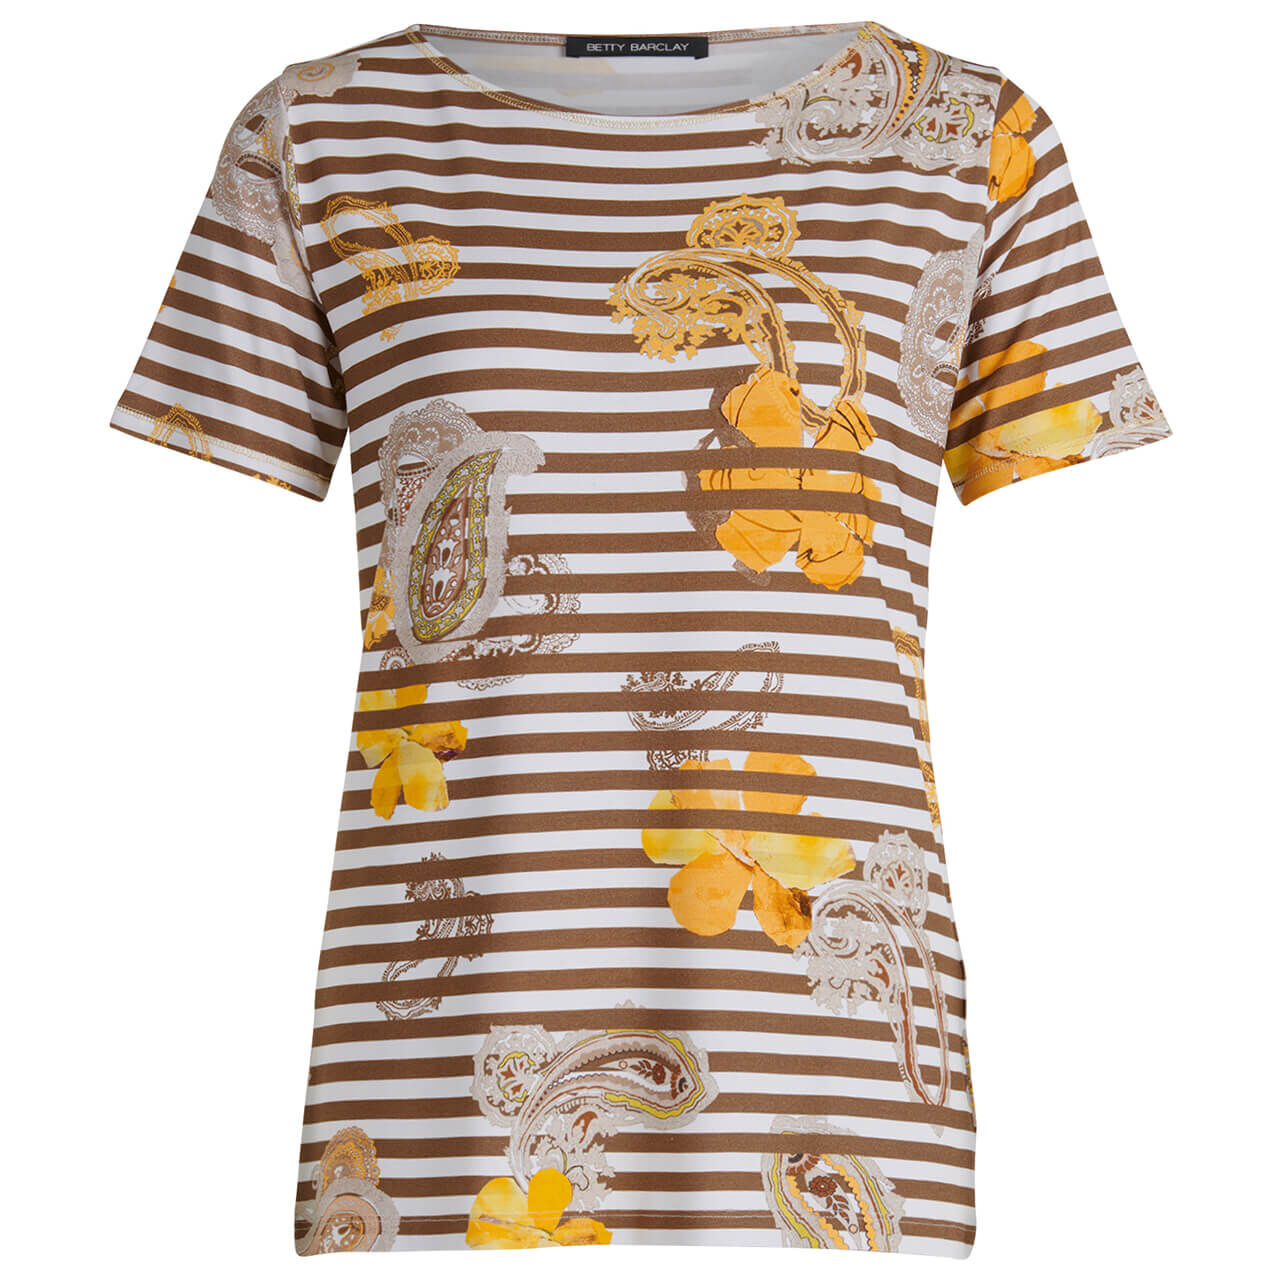 Betty Barclay T-Shirt für Damen in Dunkelbraun gestreift, FarbNr.: 7810